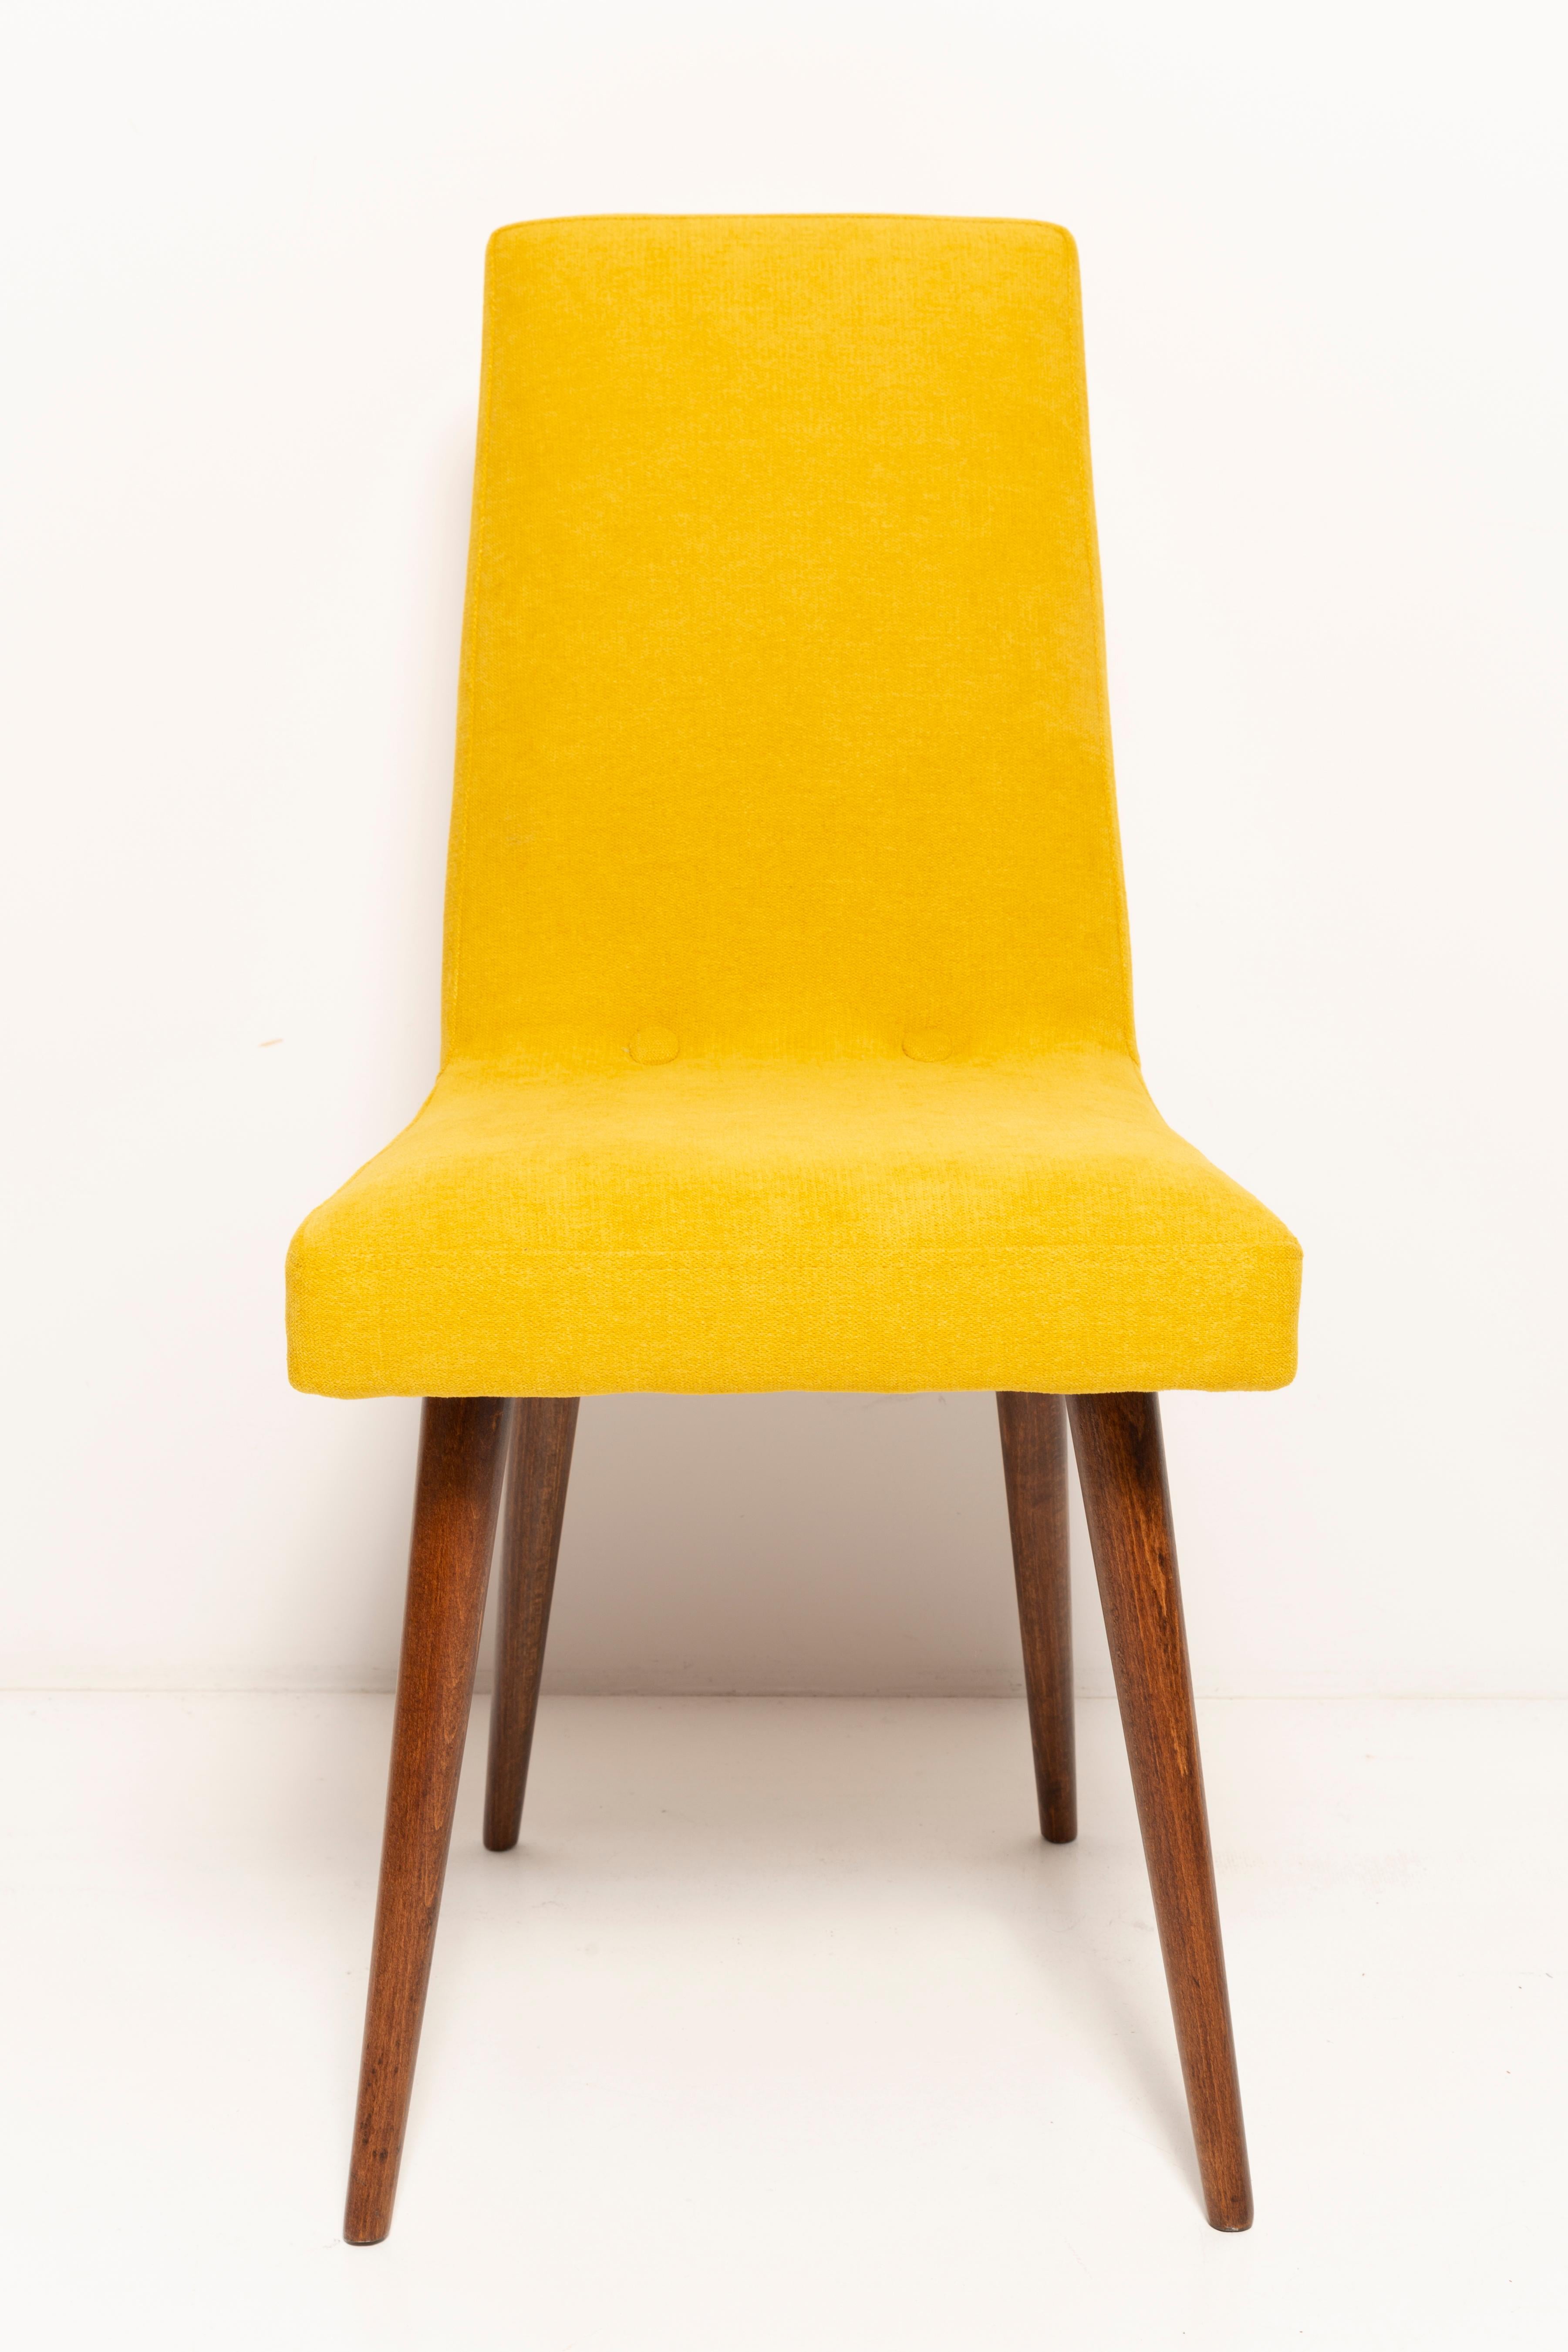 Six 20th Century Mustard Yellow Wool Chair, Rajmund Halas Europe, 1960s For Sale 3